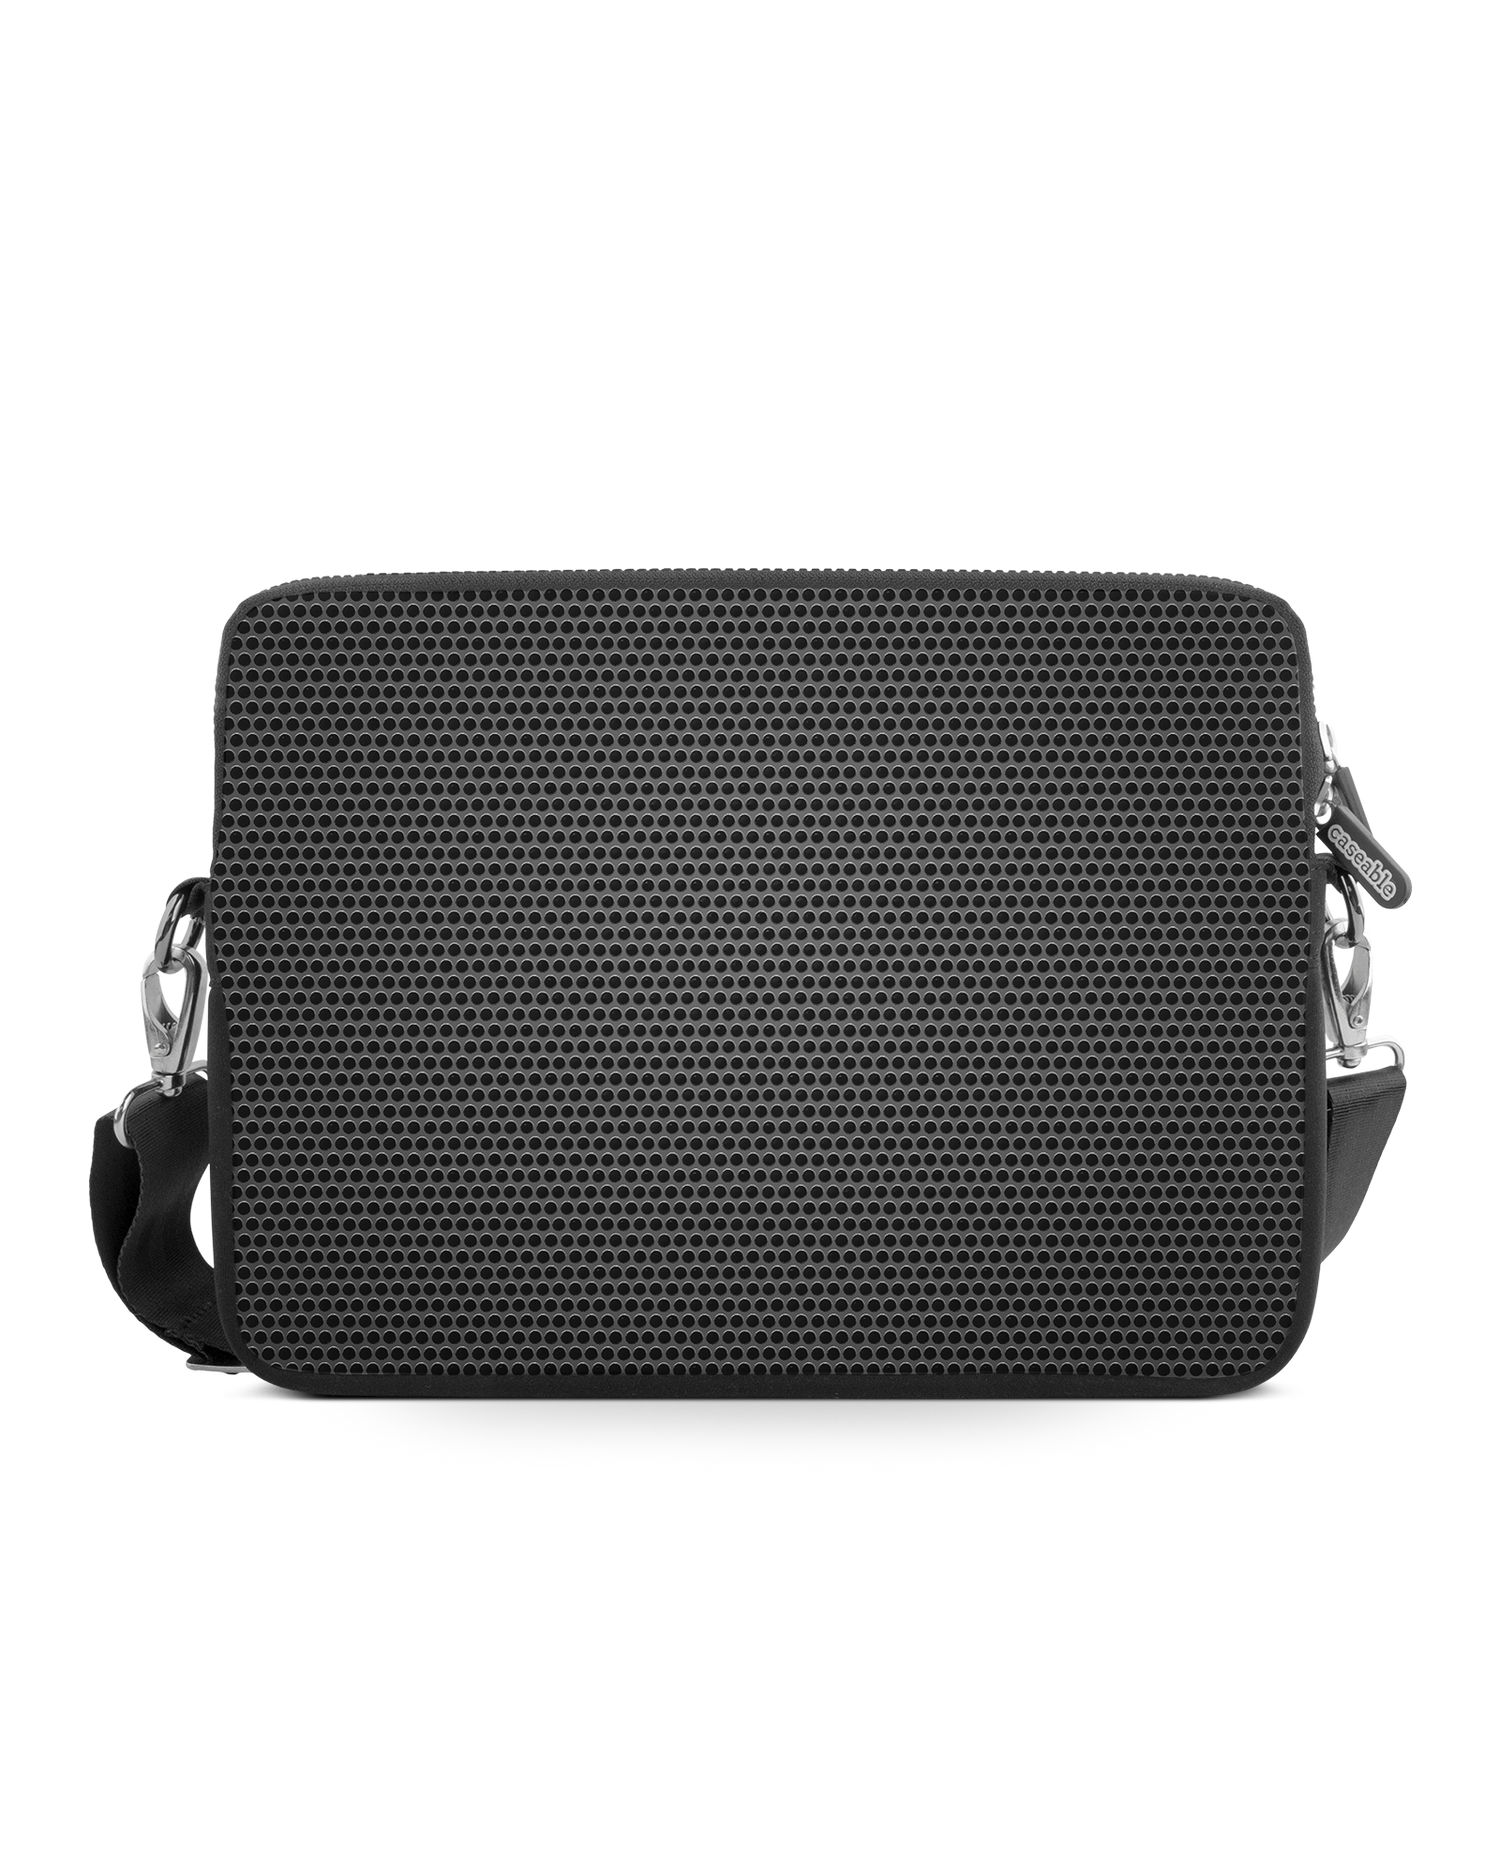 Carbon II Premium Laptop Bag 15 inch: Front View